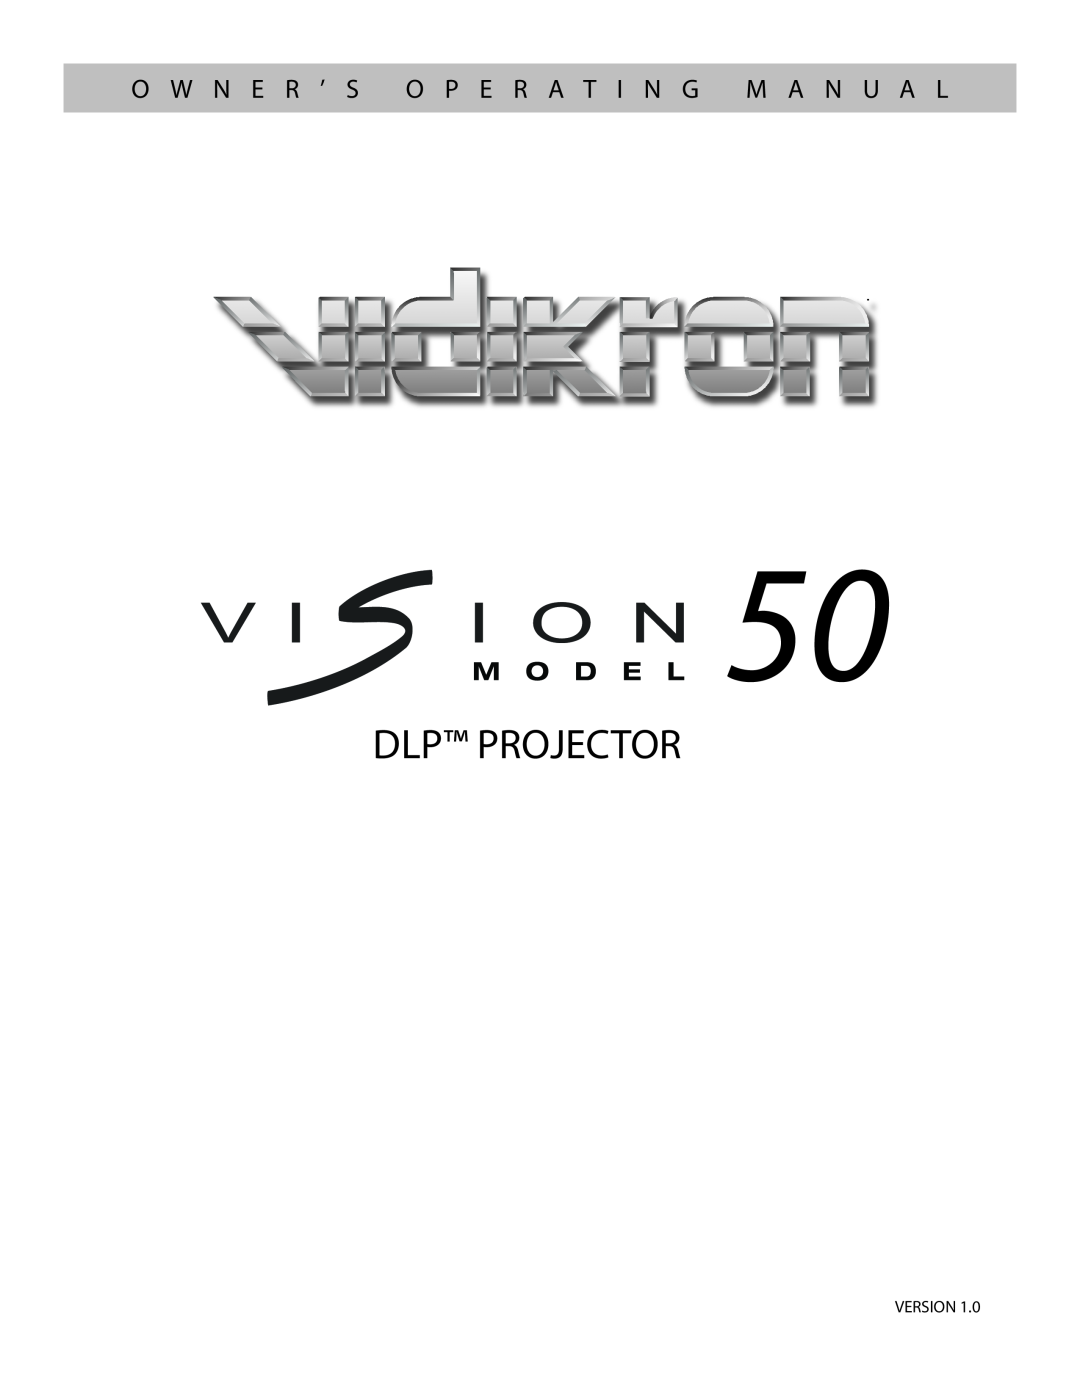 Vidikron 50 manual Dlp Projector, O W N E R ’ S O P E R A T I N G M A N U A L 